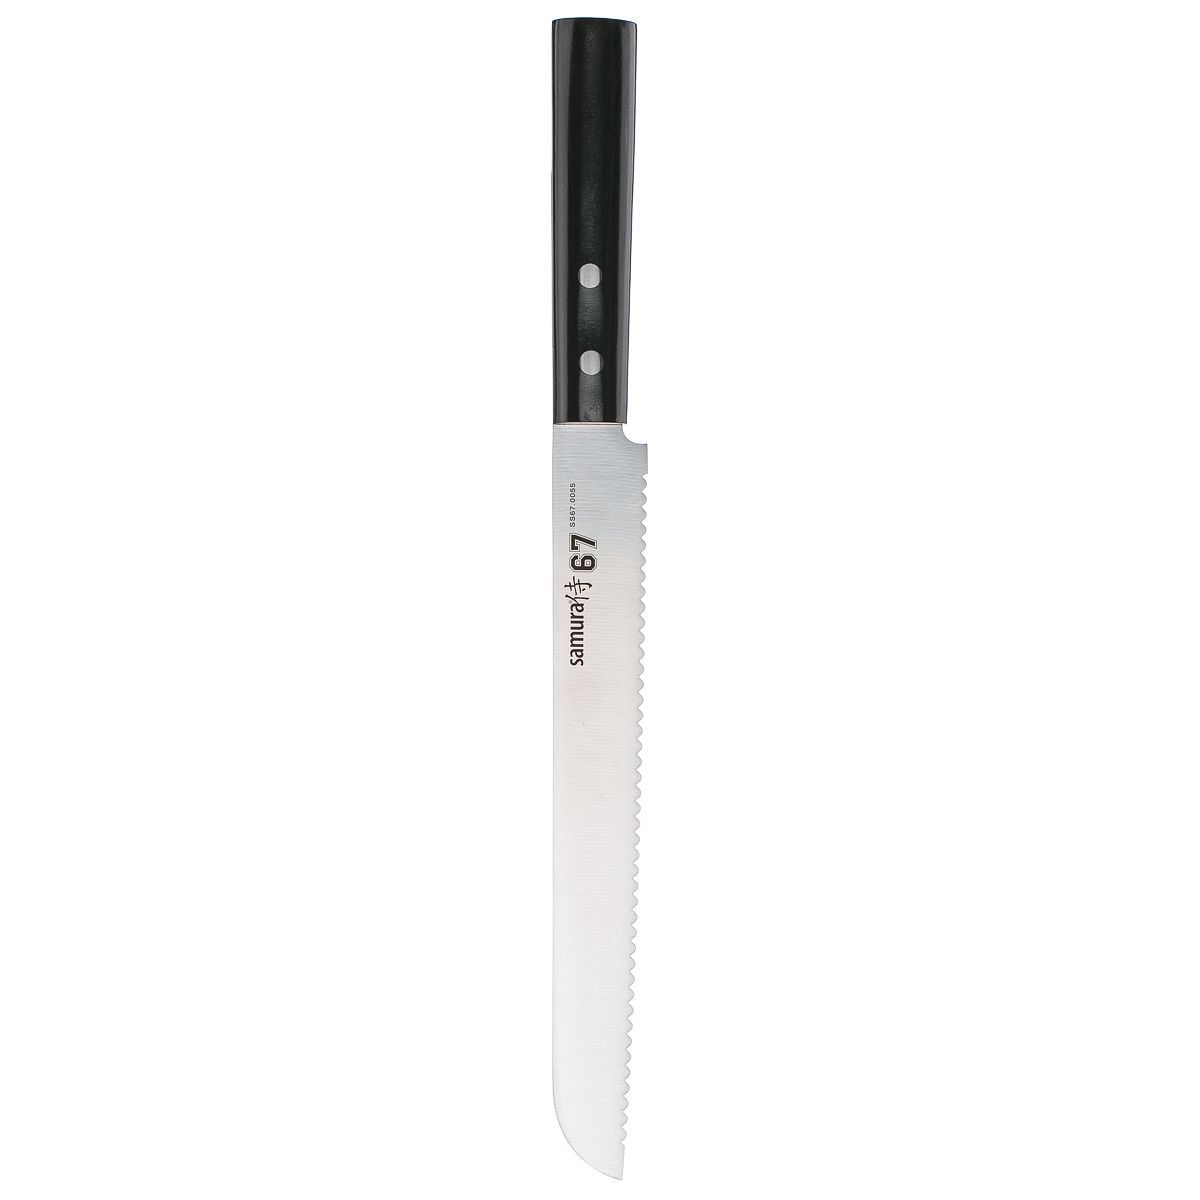 Нож для хлеба Samura 67 SS67-0055, сталь AUS-8, рукоять ABS пластик - фото 2